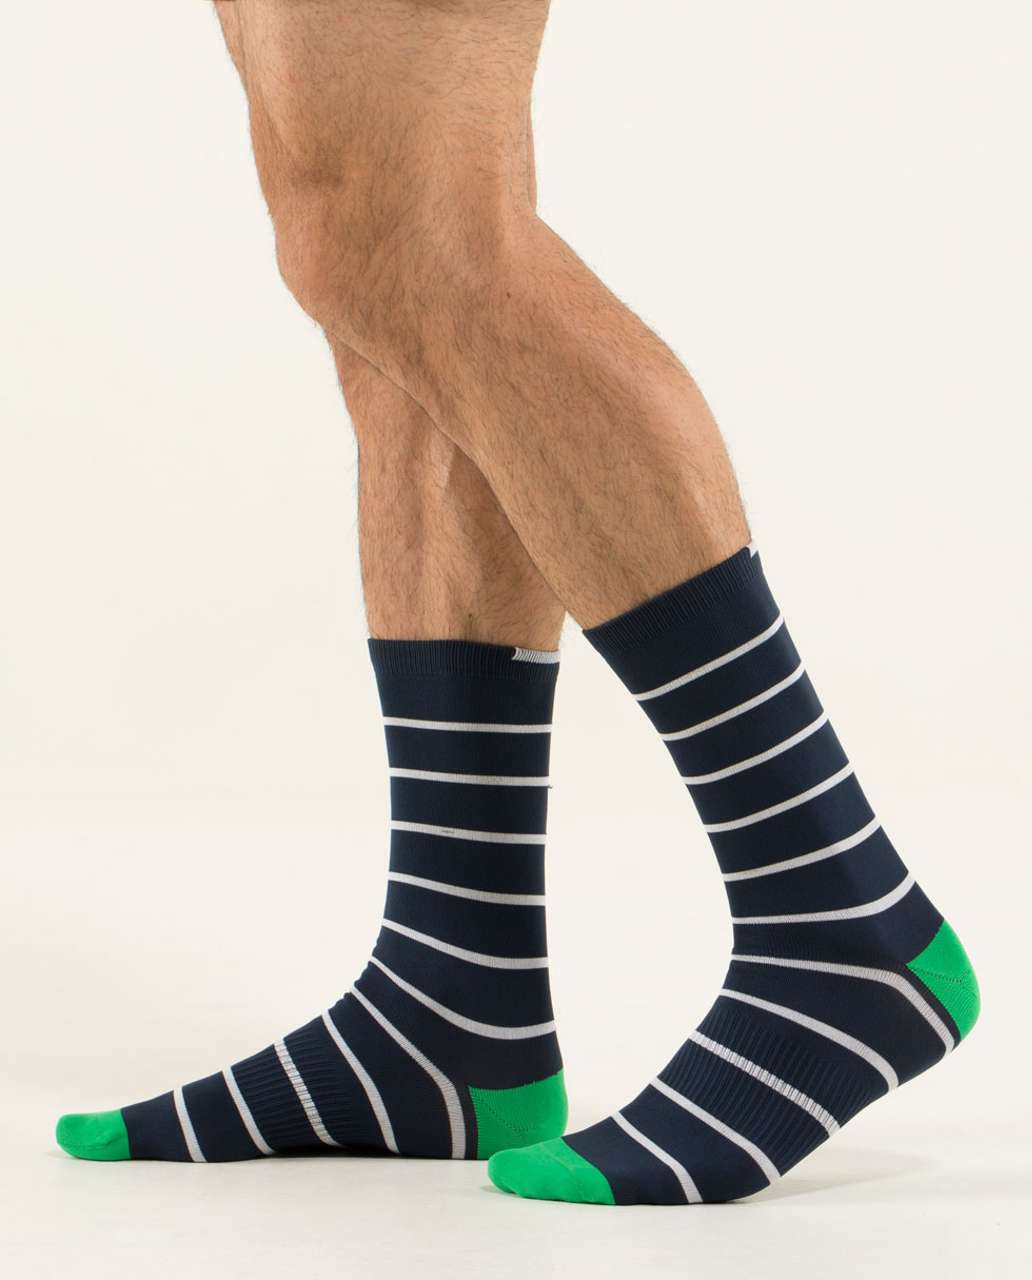 Lululemon Daily Sock - Classic Stripe Inkwell Green Bean